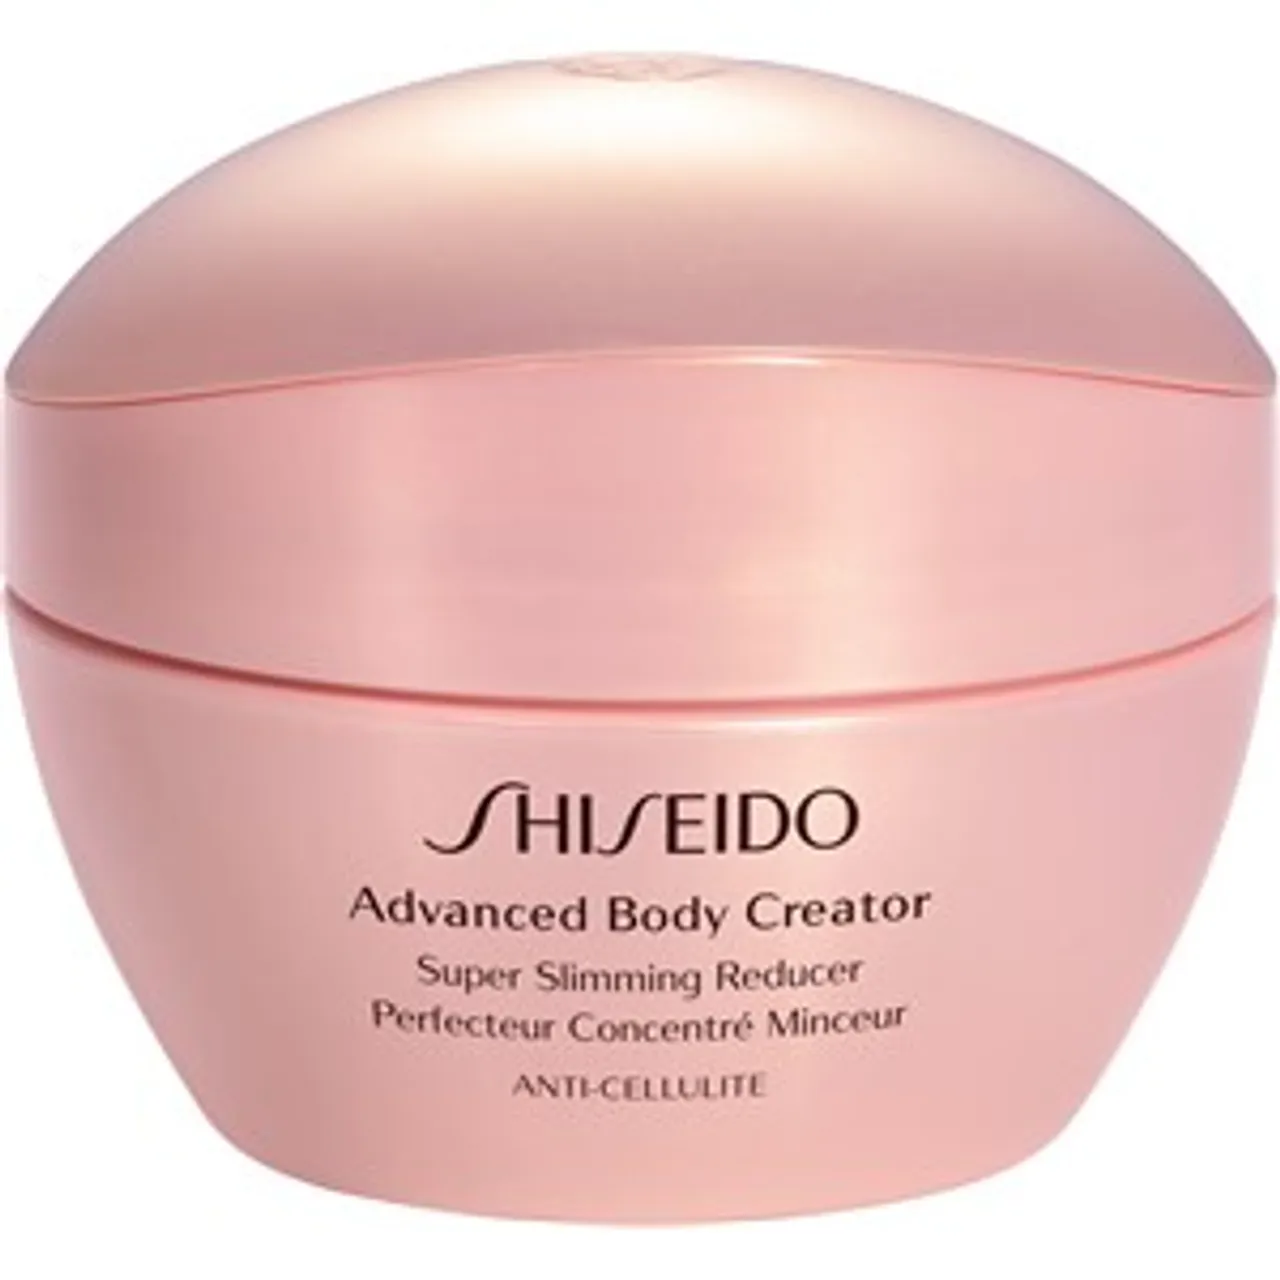 Shiseido Advanced Body Creator Female 200 ml